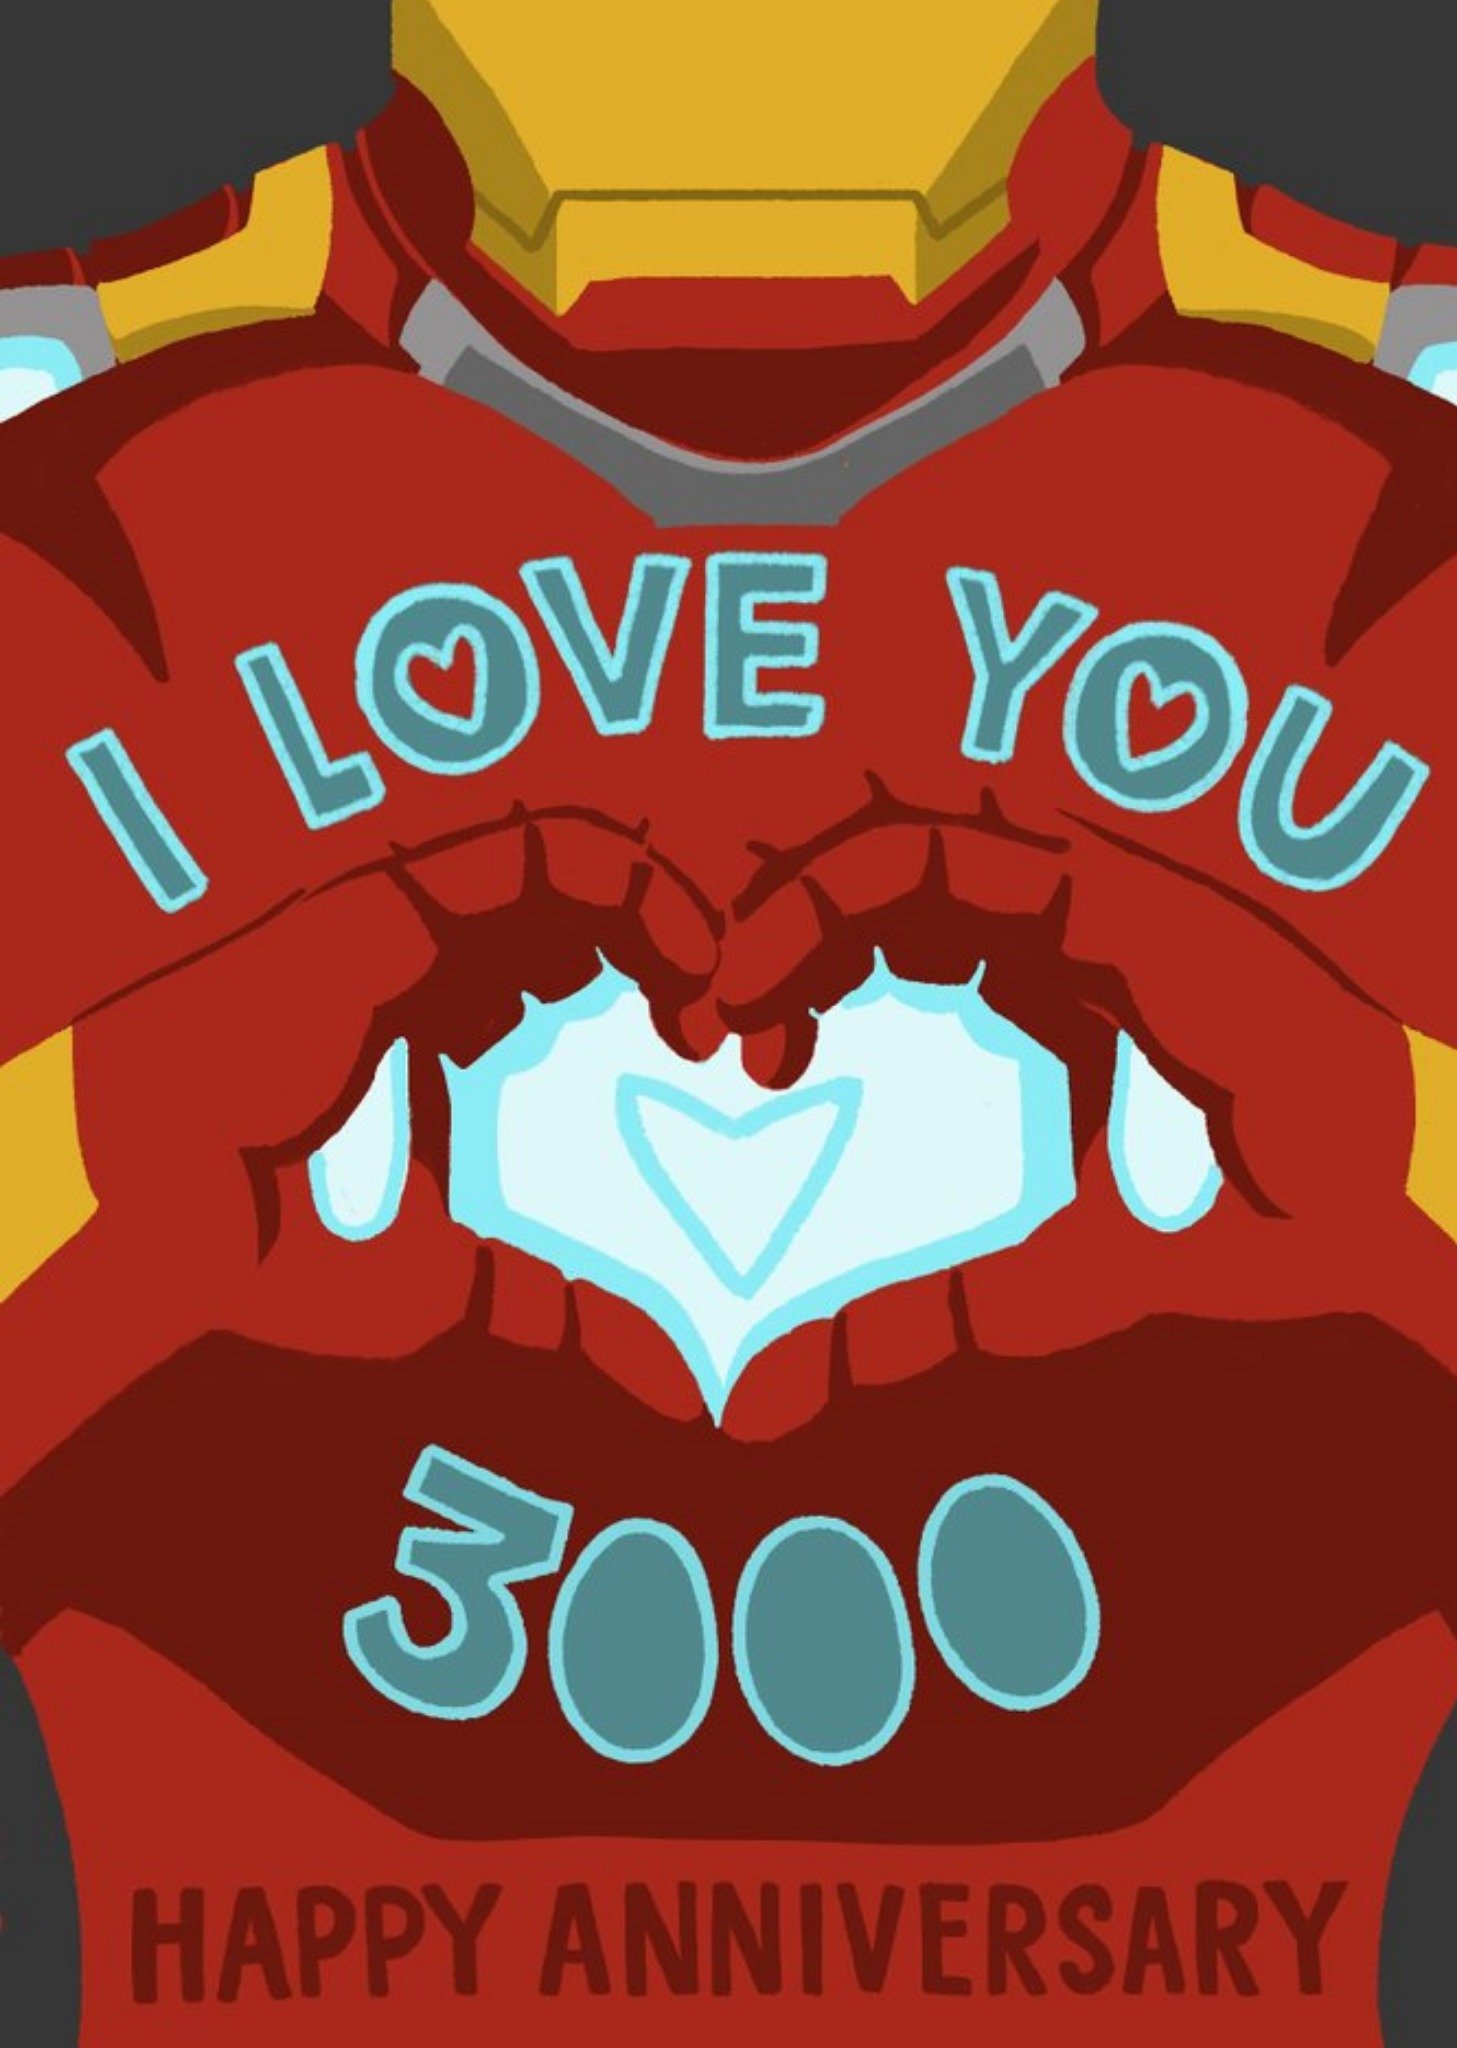 Marvel Comics Iron Man - I Love You 3000 - Anniversary Card, Large